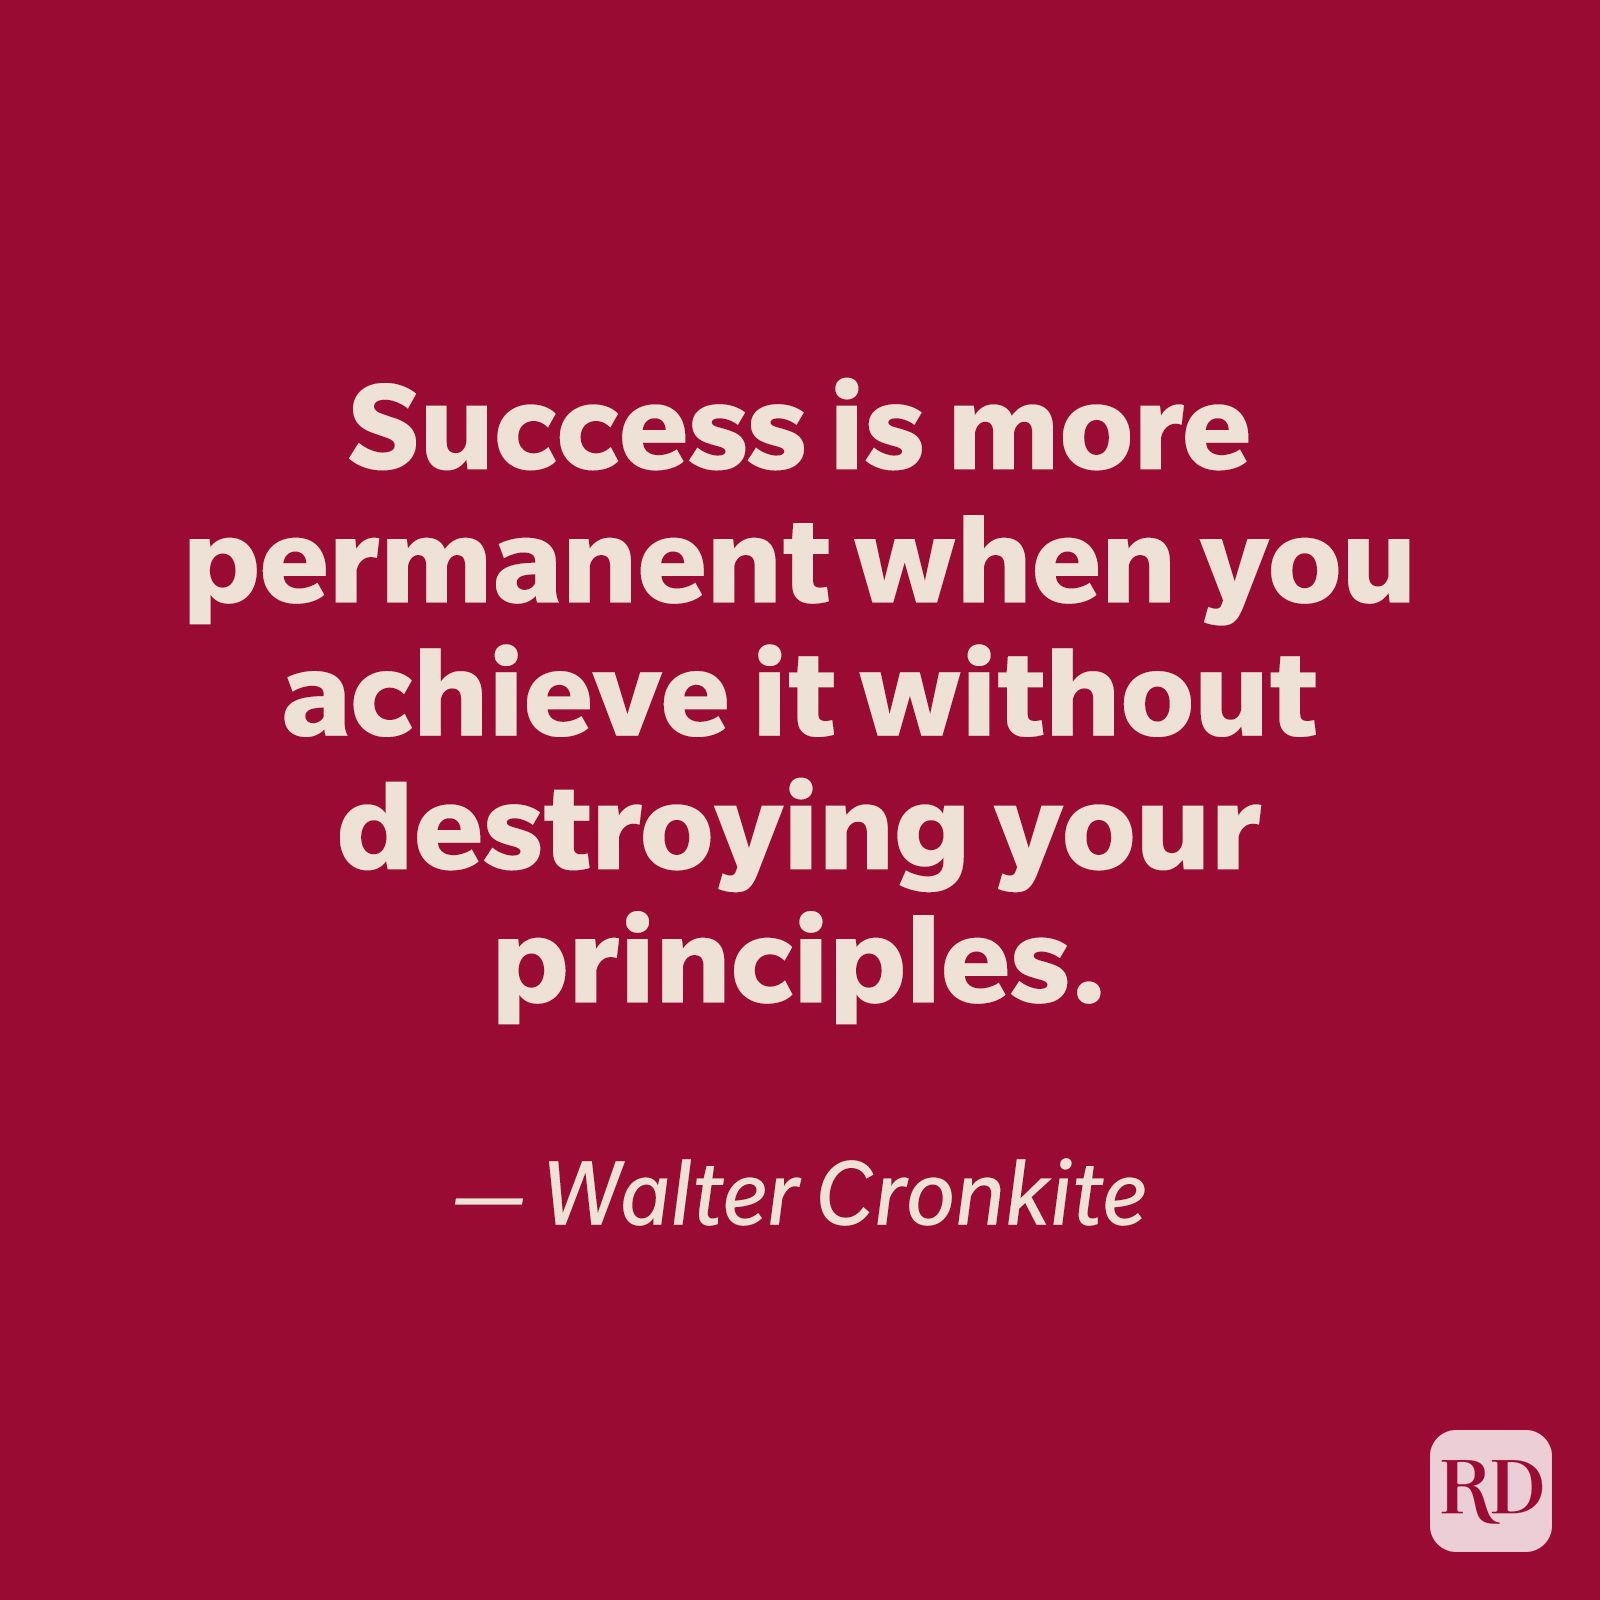 Walter Cronkite quote